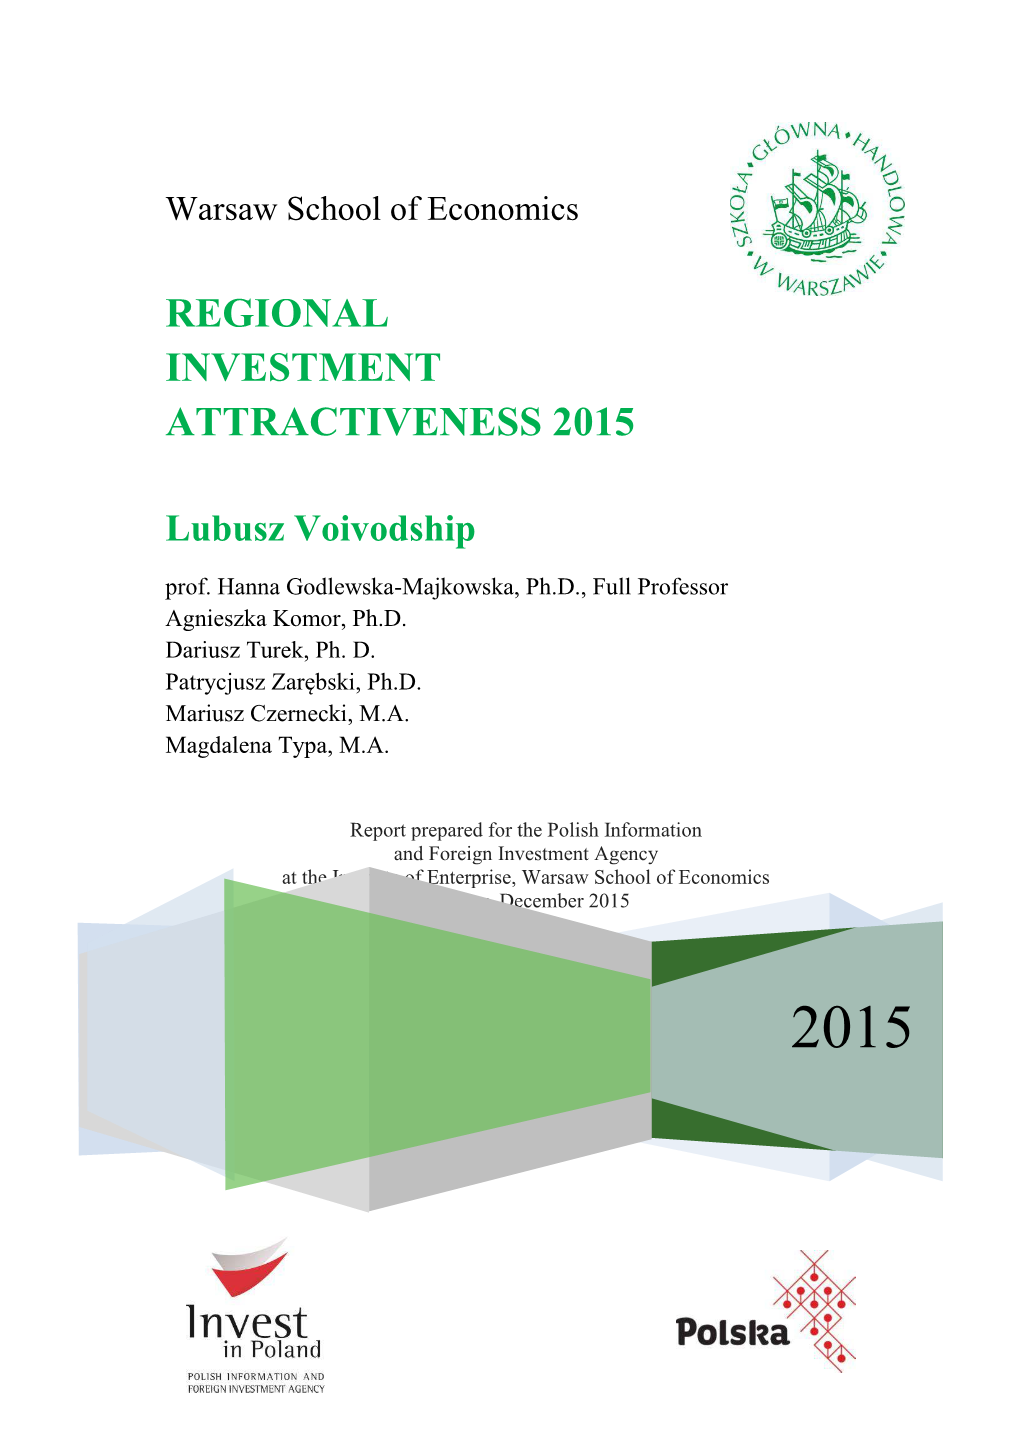 REGIONAL INVESTMENT ATTRACTIVENESS 2015 Lubusz